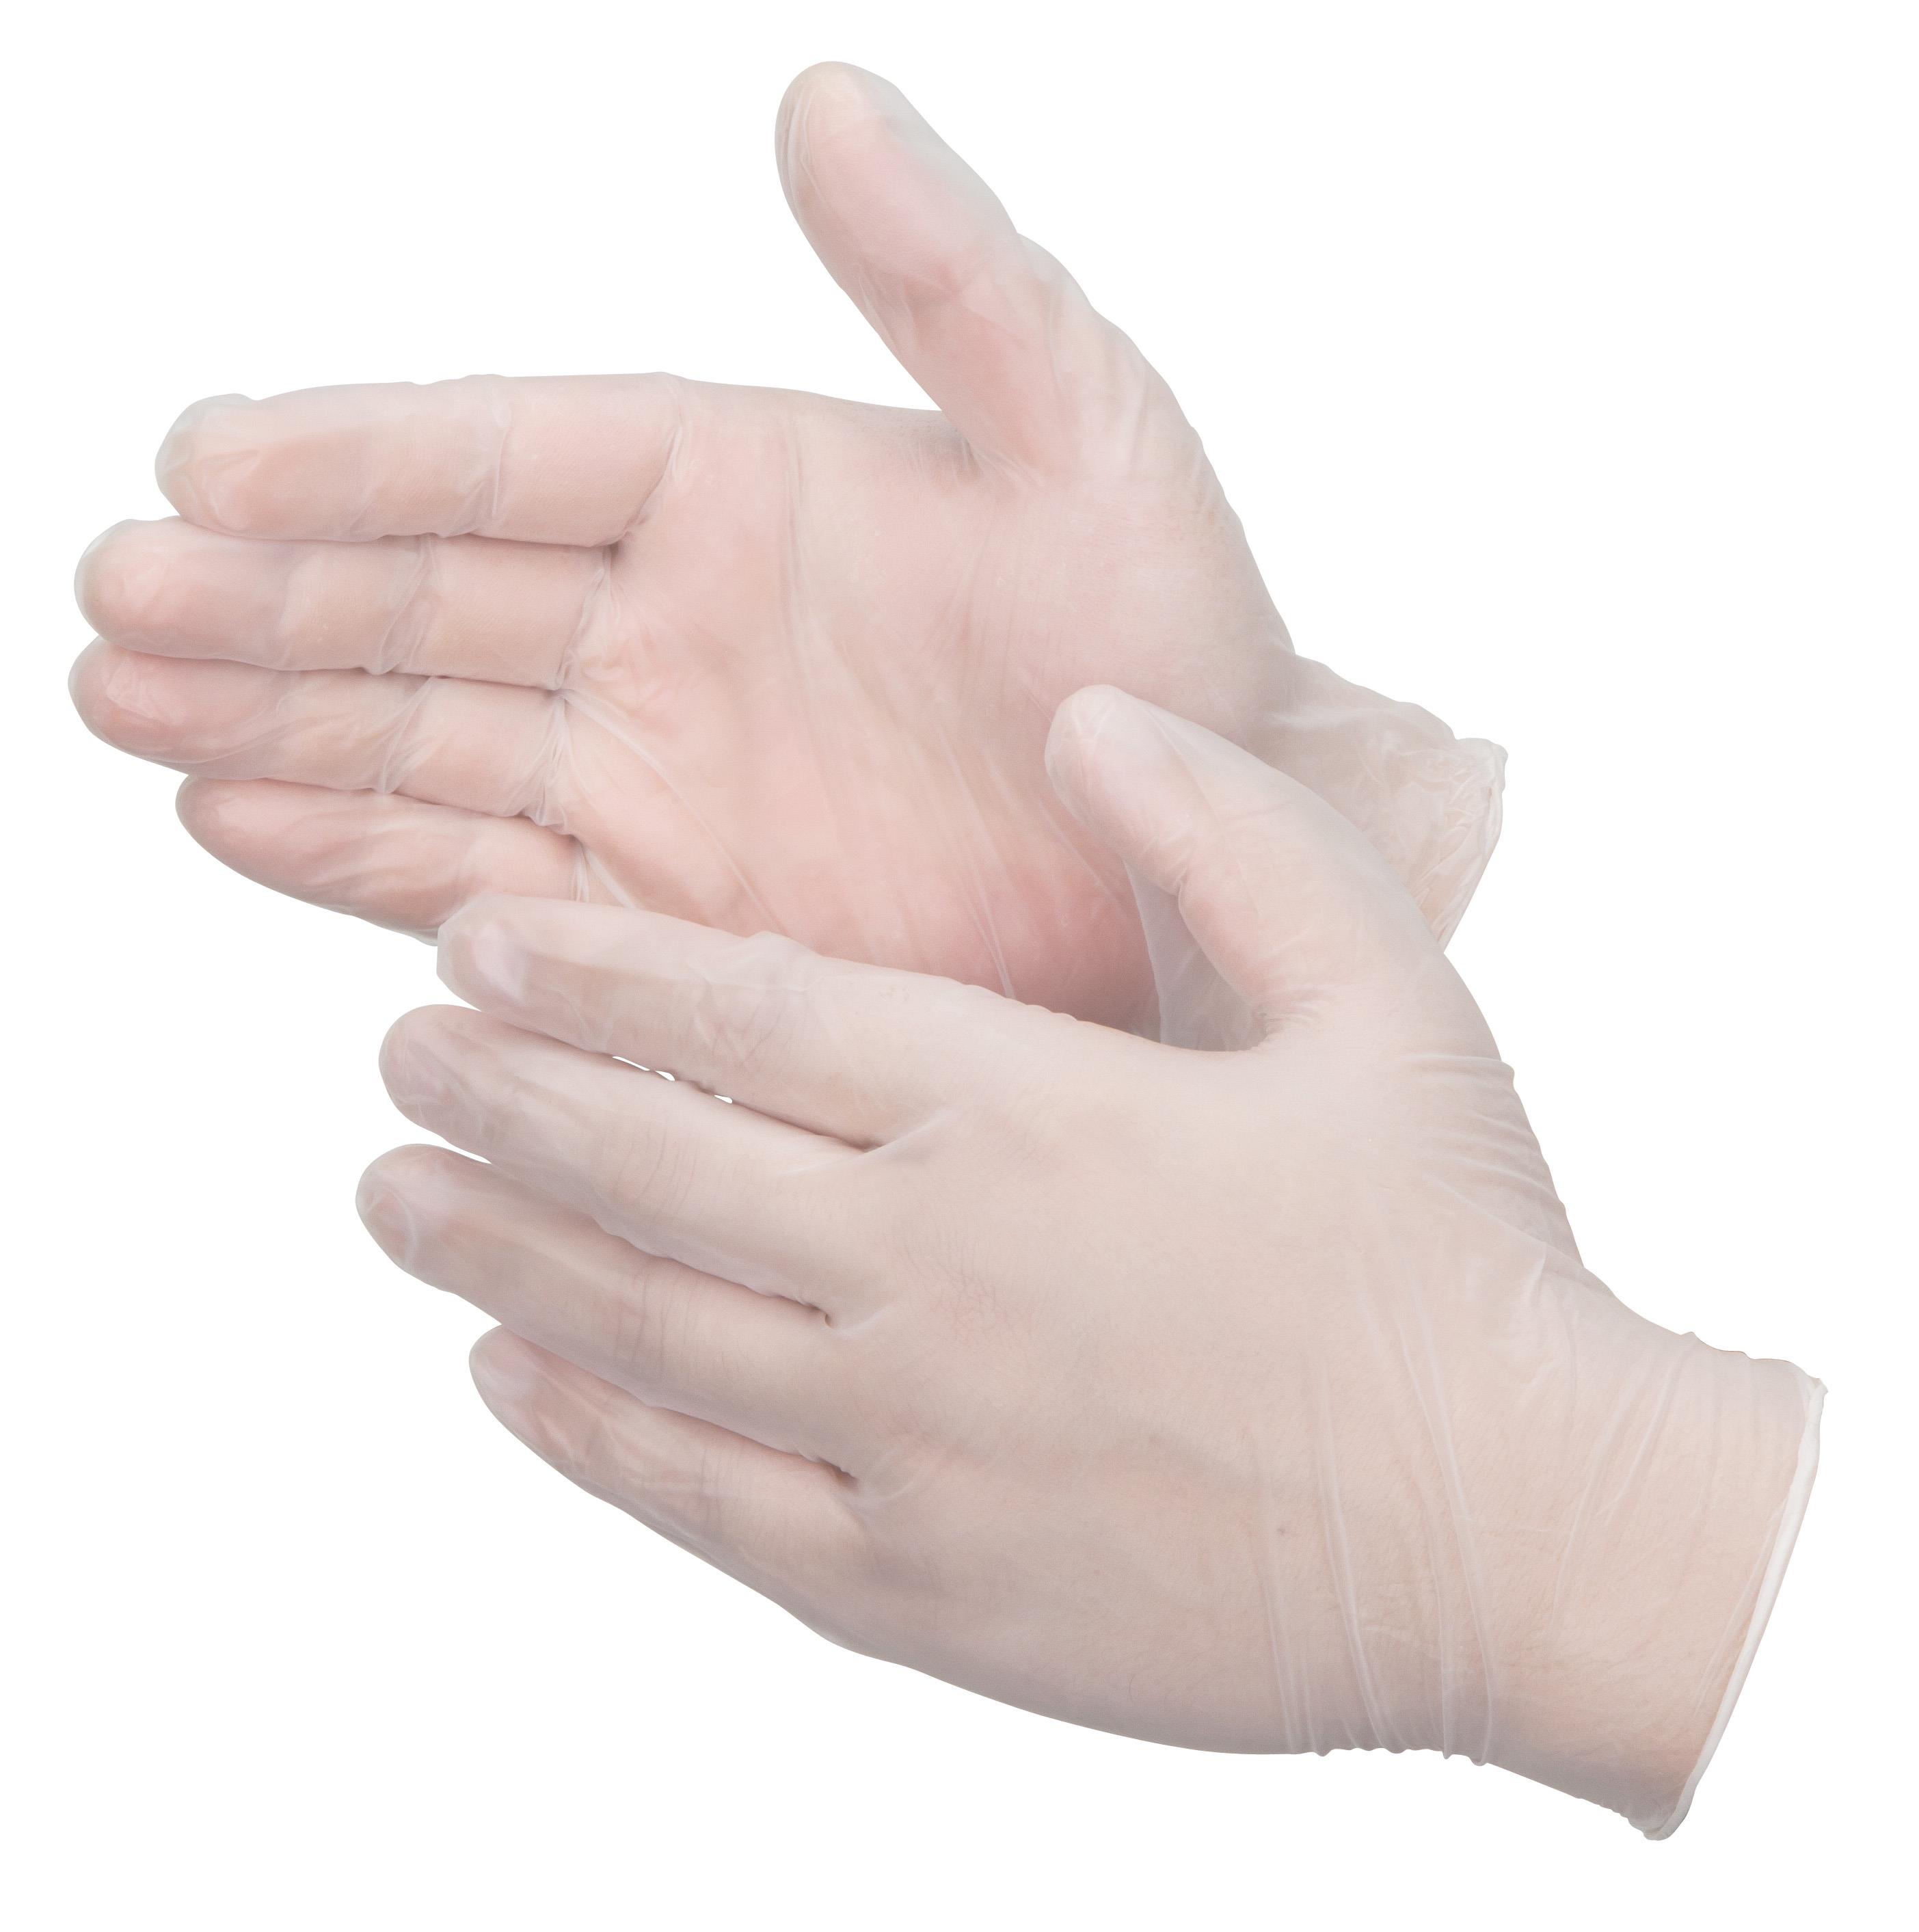 DURASKIN 4 MIL POWDERED VINYL 100/BX - Disposable Gloves